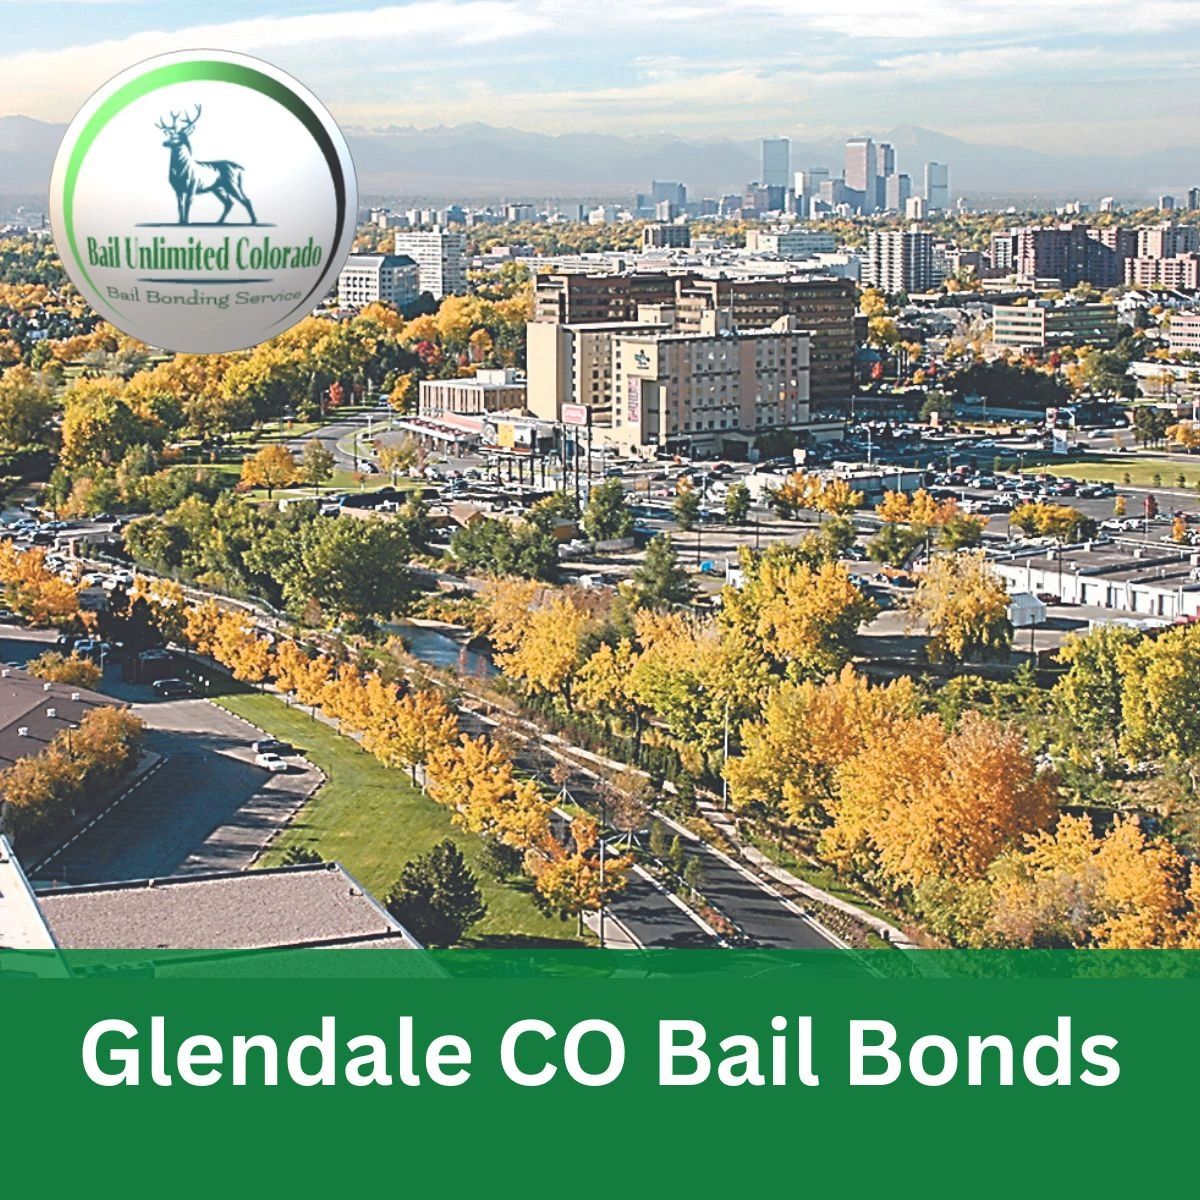 LOGO Bail Unlimited Colorado TEXT Glendale CO Bail Bonds - Glendale municipality 39.70498 -104.93359